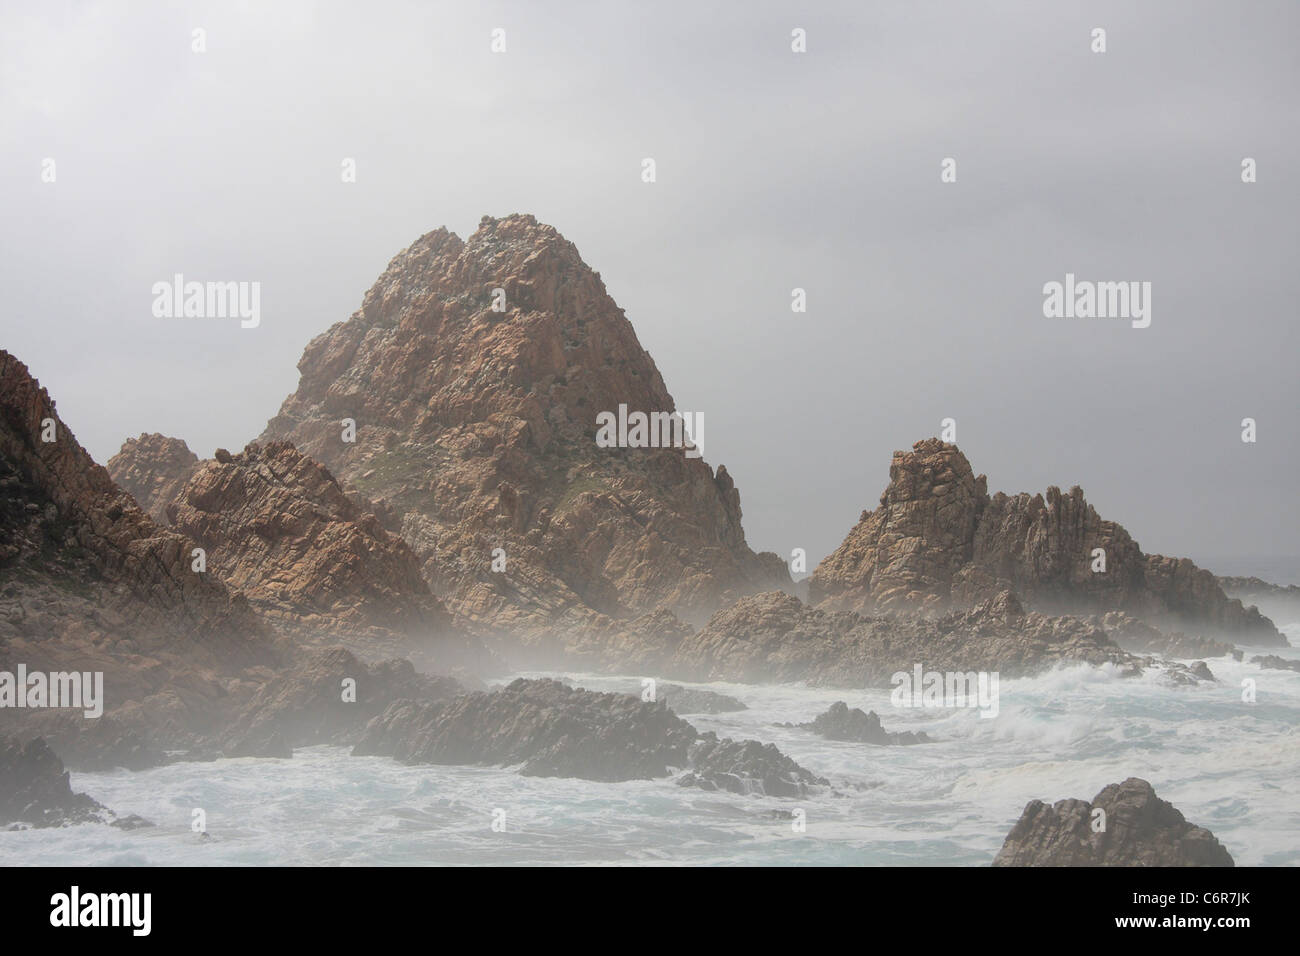 Rock pillars off the coast Stock Photo